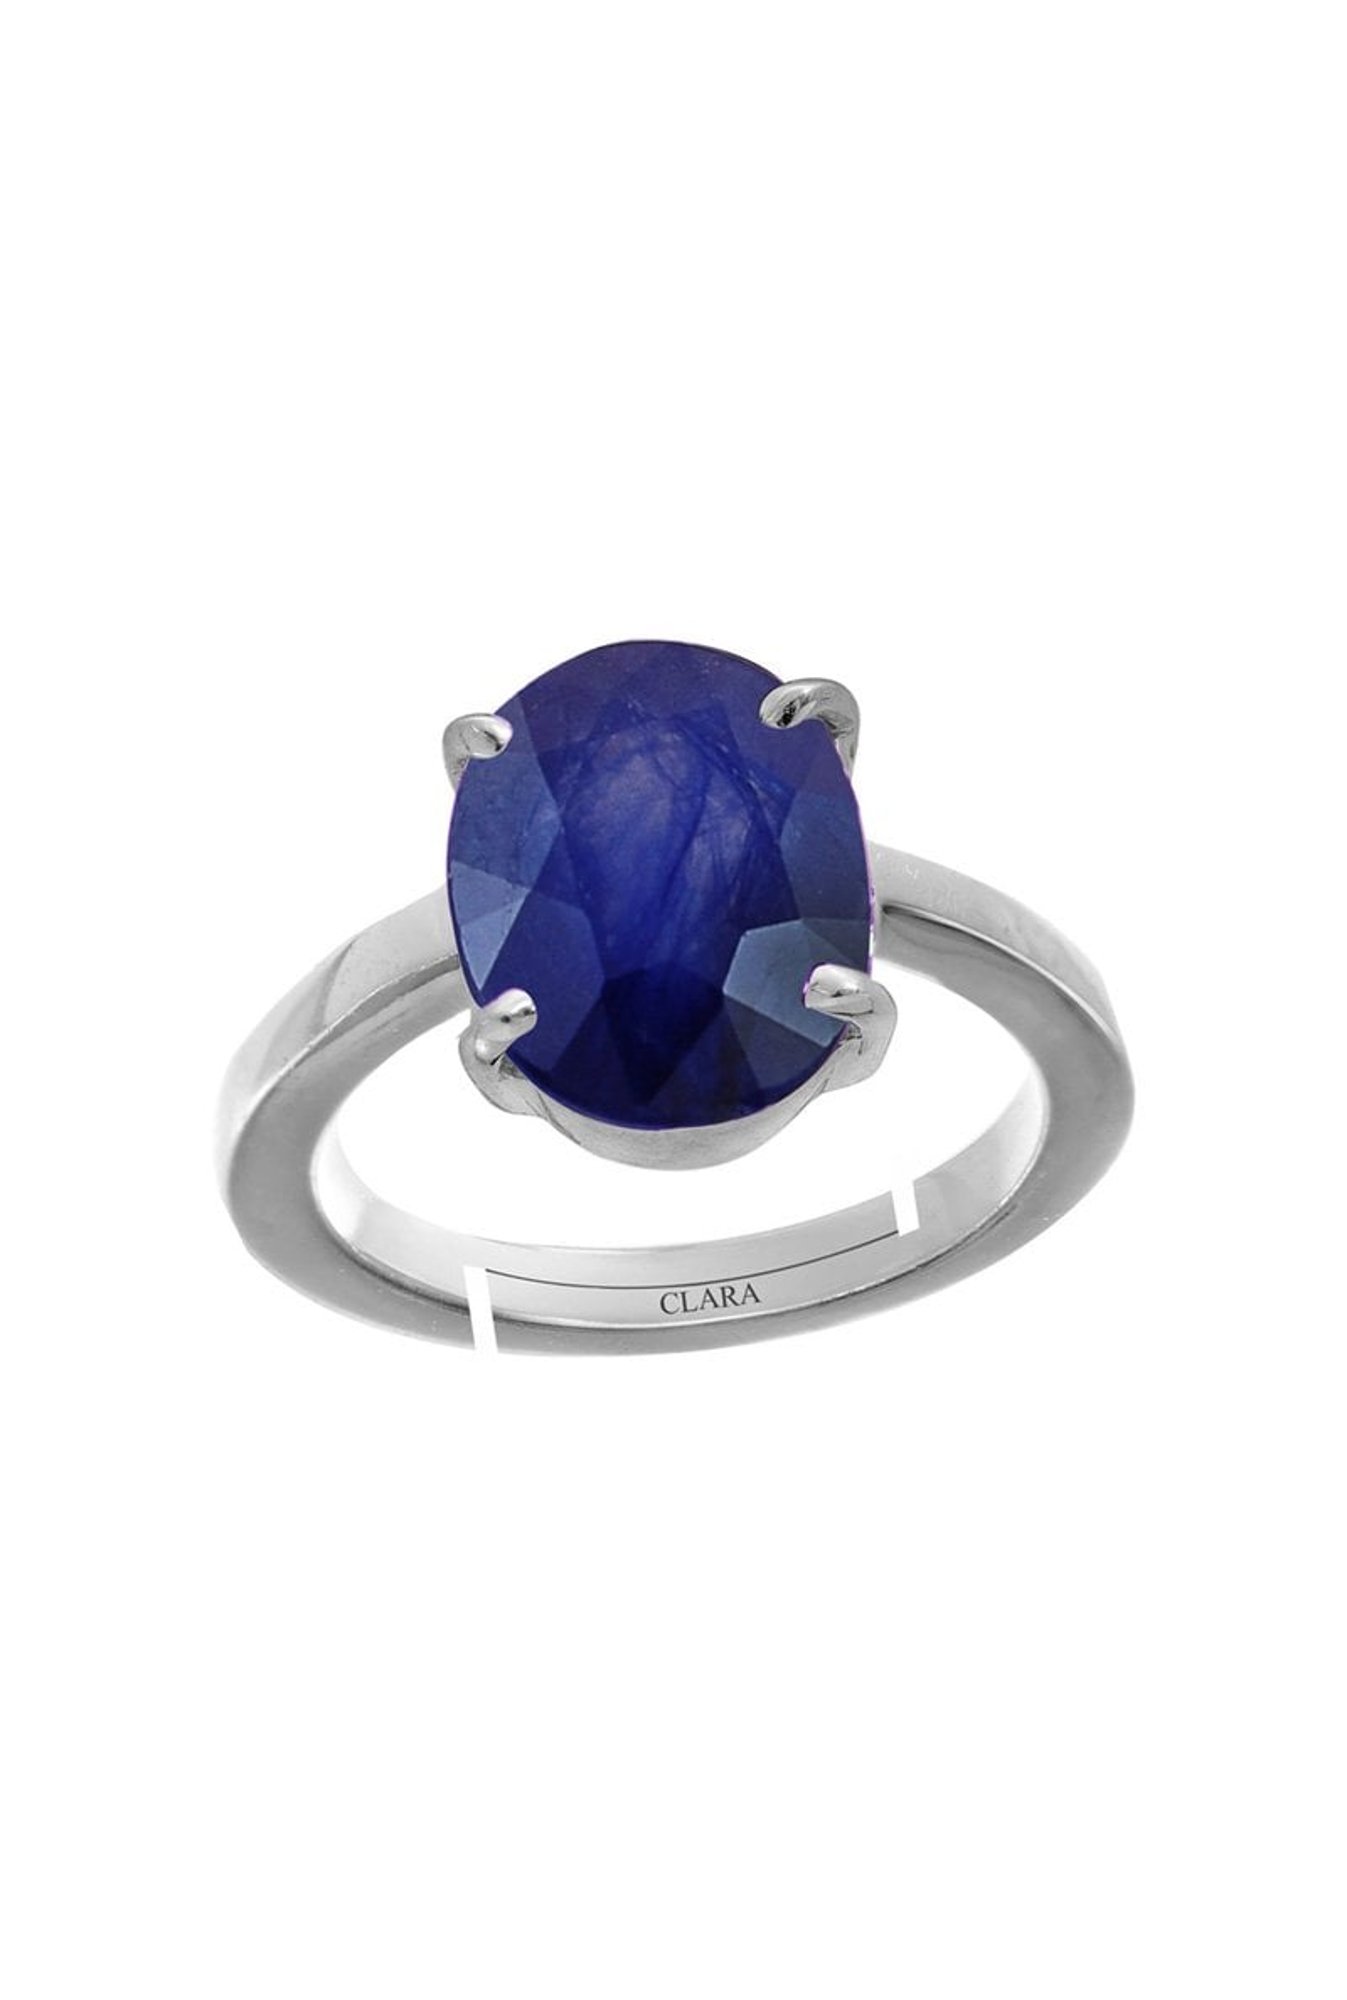 TODANI JEMS 9.25 Ratti Certified Original Blue Sapphire Ring Panchdhatu  Adjustable Neelam Ring for Men & Women by Lab Certified : Amazon.in: Fashion